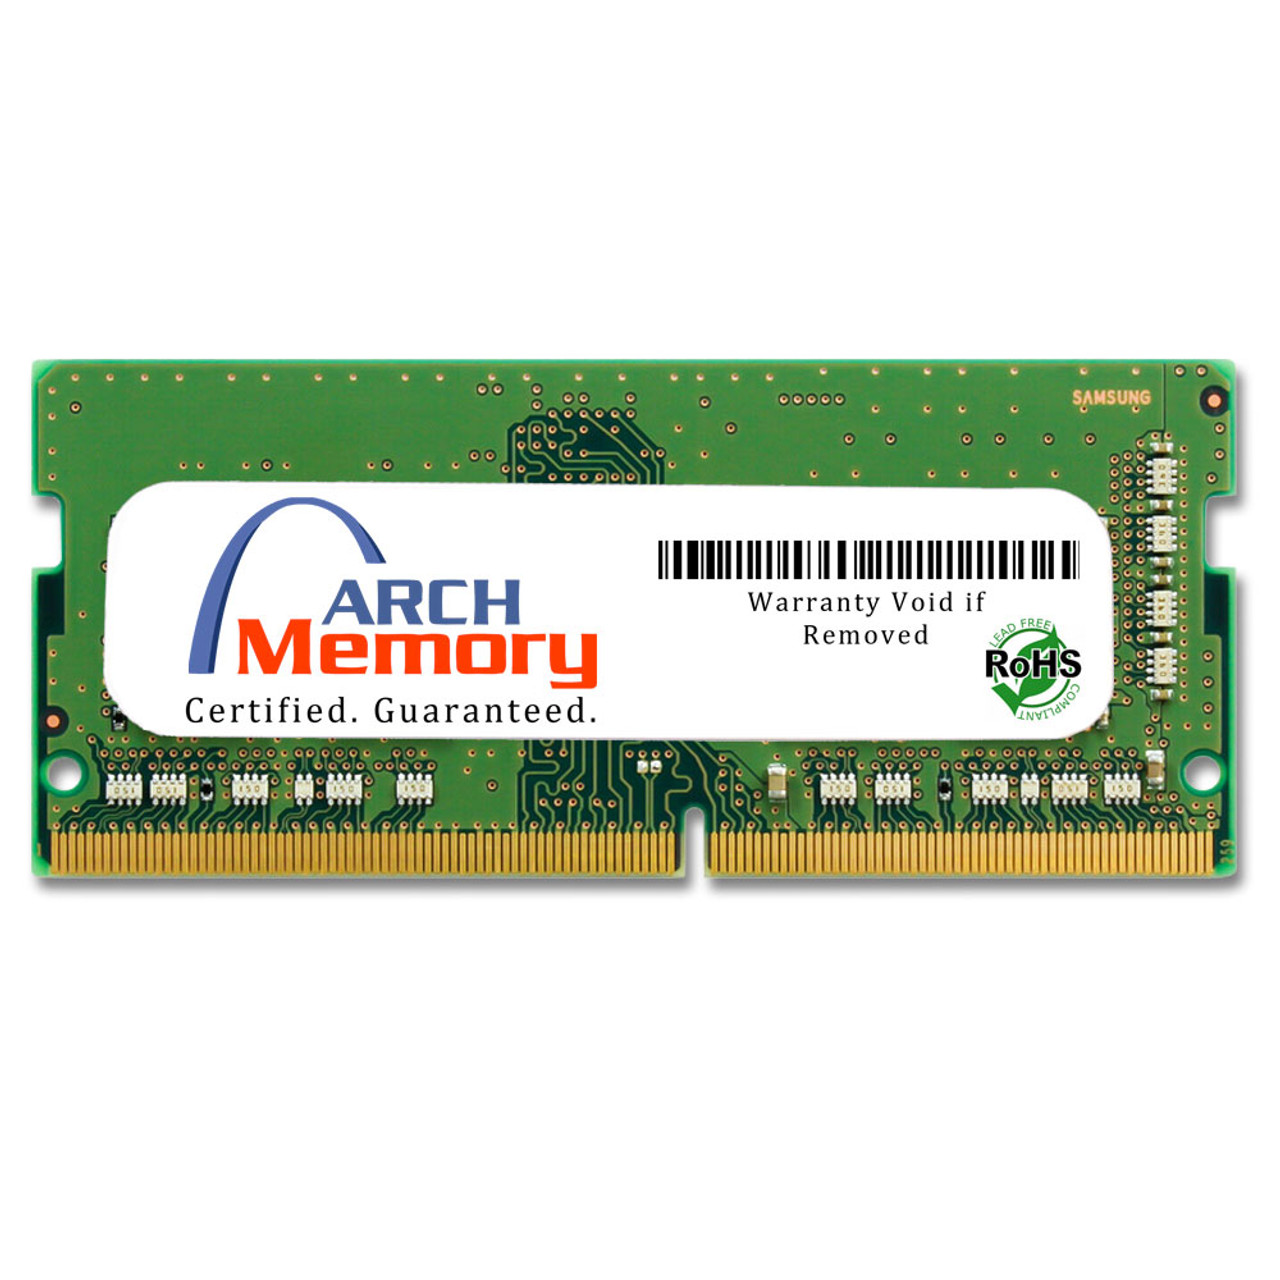 eBay*8GB 260-Pin DDR4-2666 PC4-21300 Sodimm (1Rx8) RAM